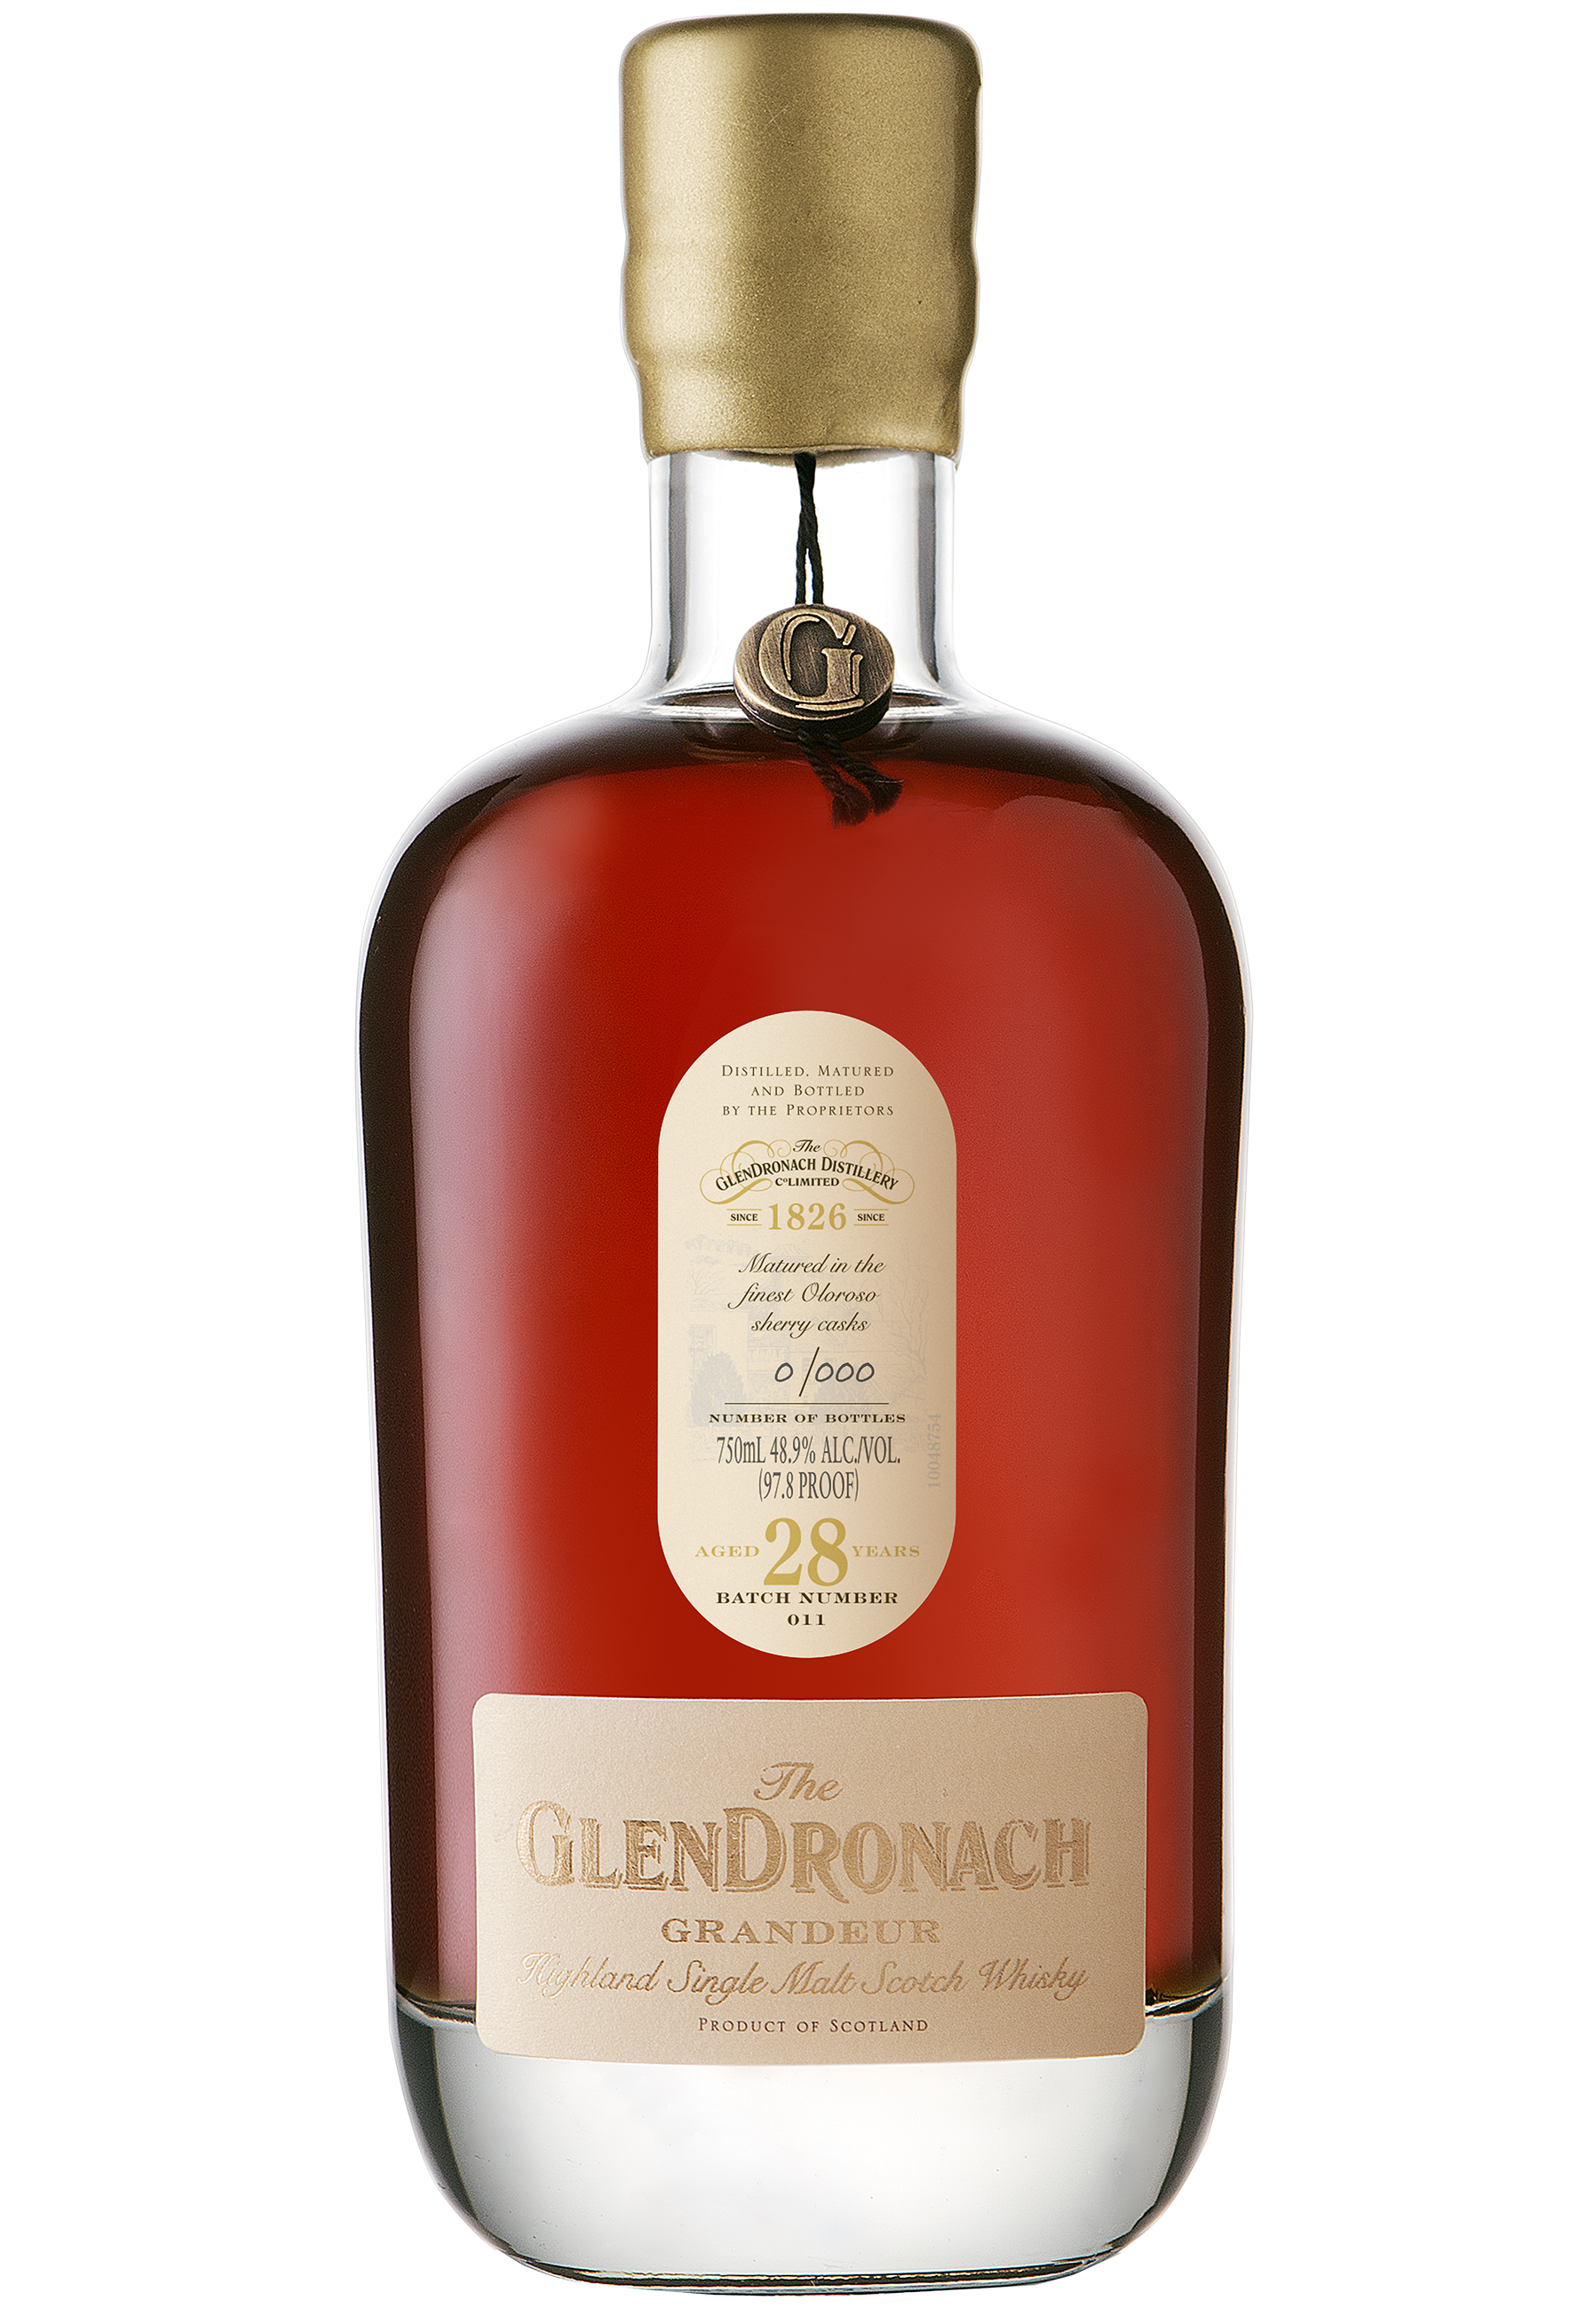 The GlenDronach GRANDEUR BATCH 11 bottle